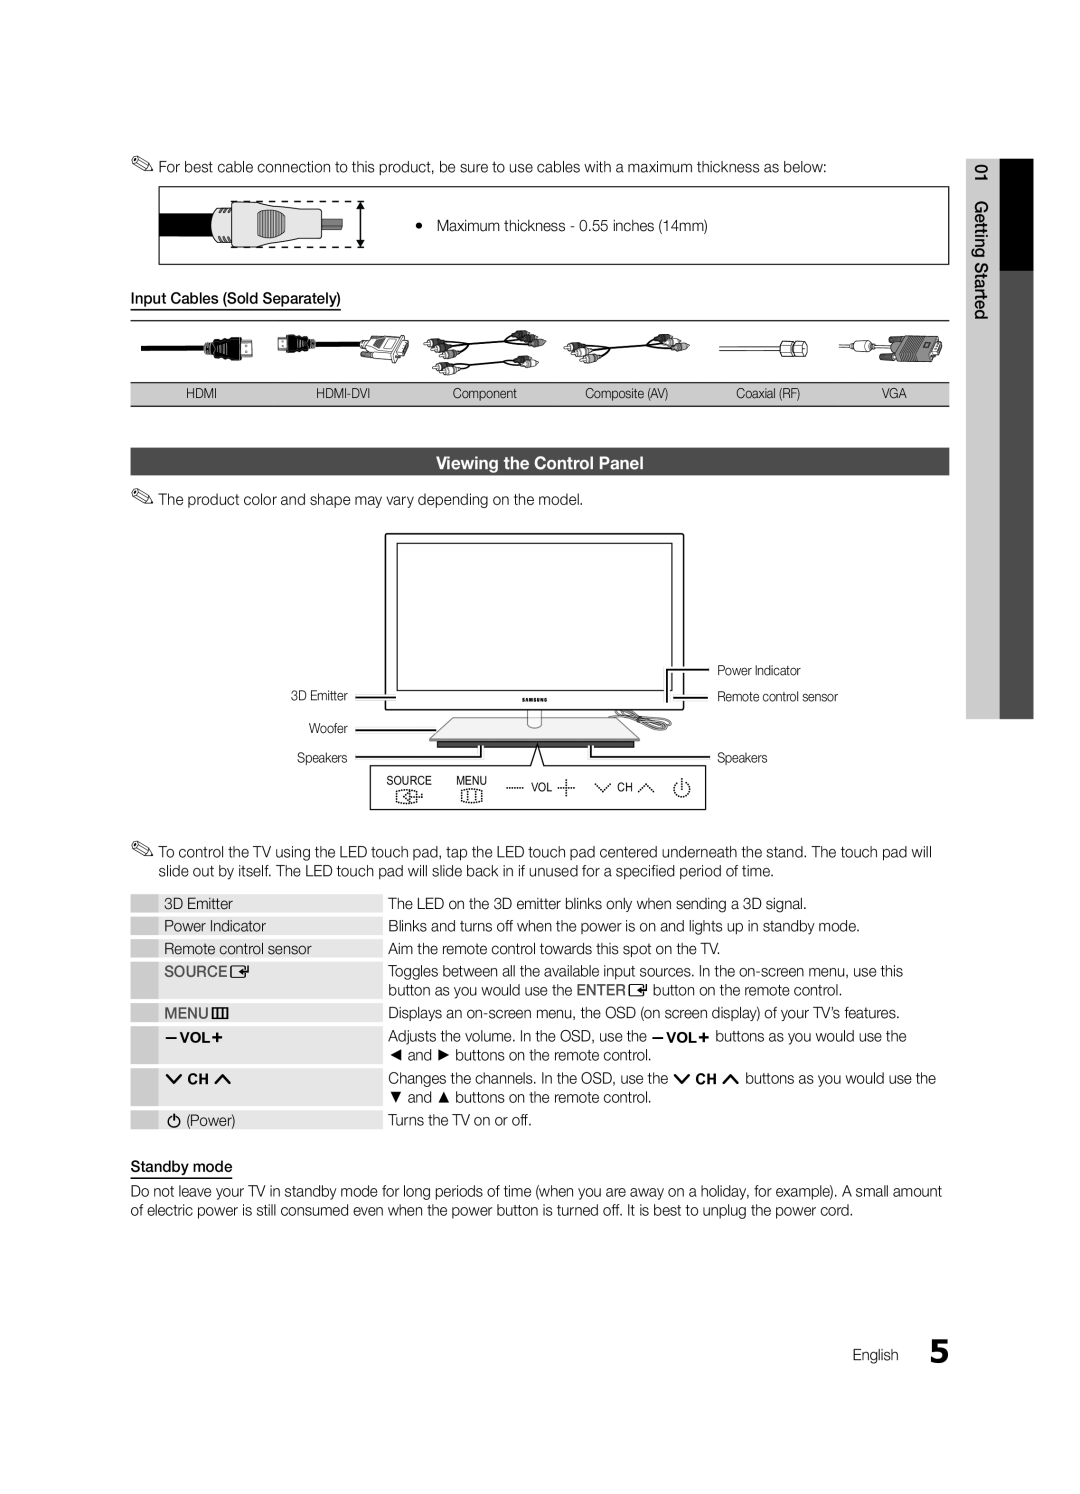 Samsung Series C9, BN68-03088A-01 user manual Viewing the Control Panel, Source E, MENU m 